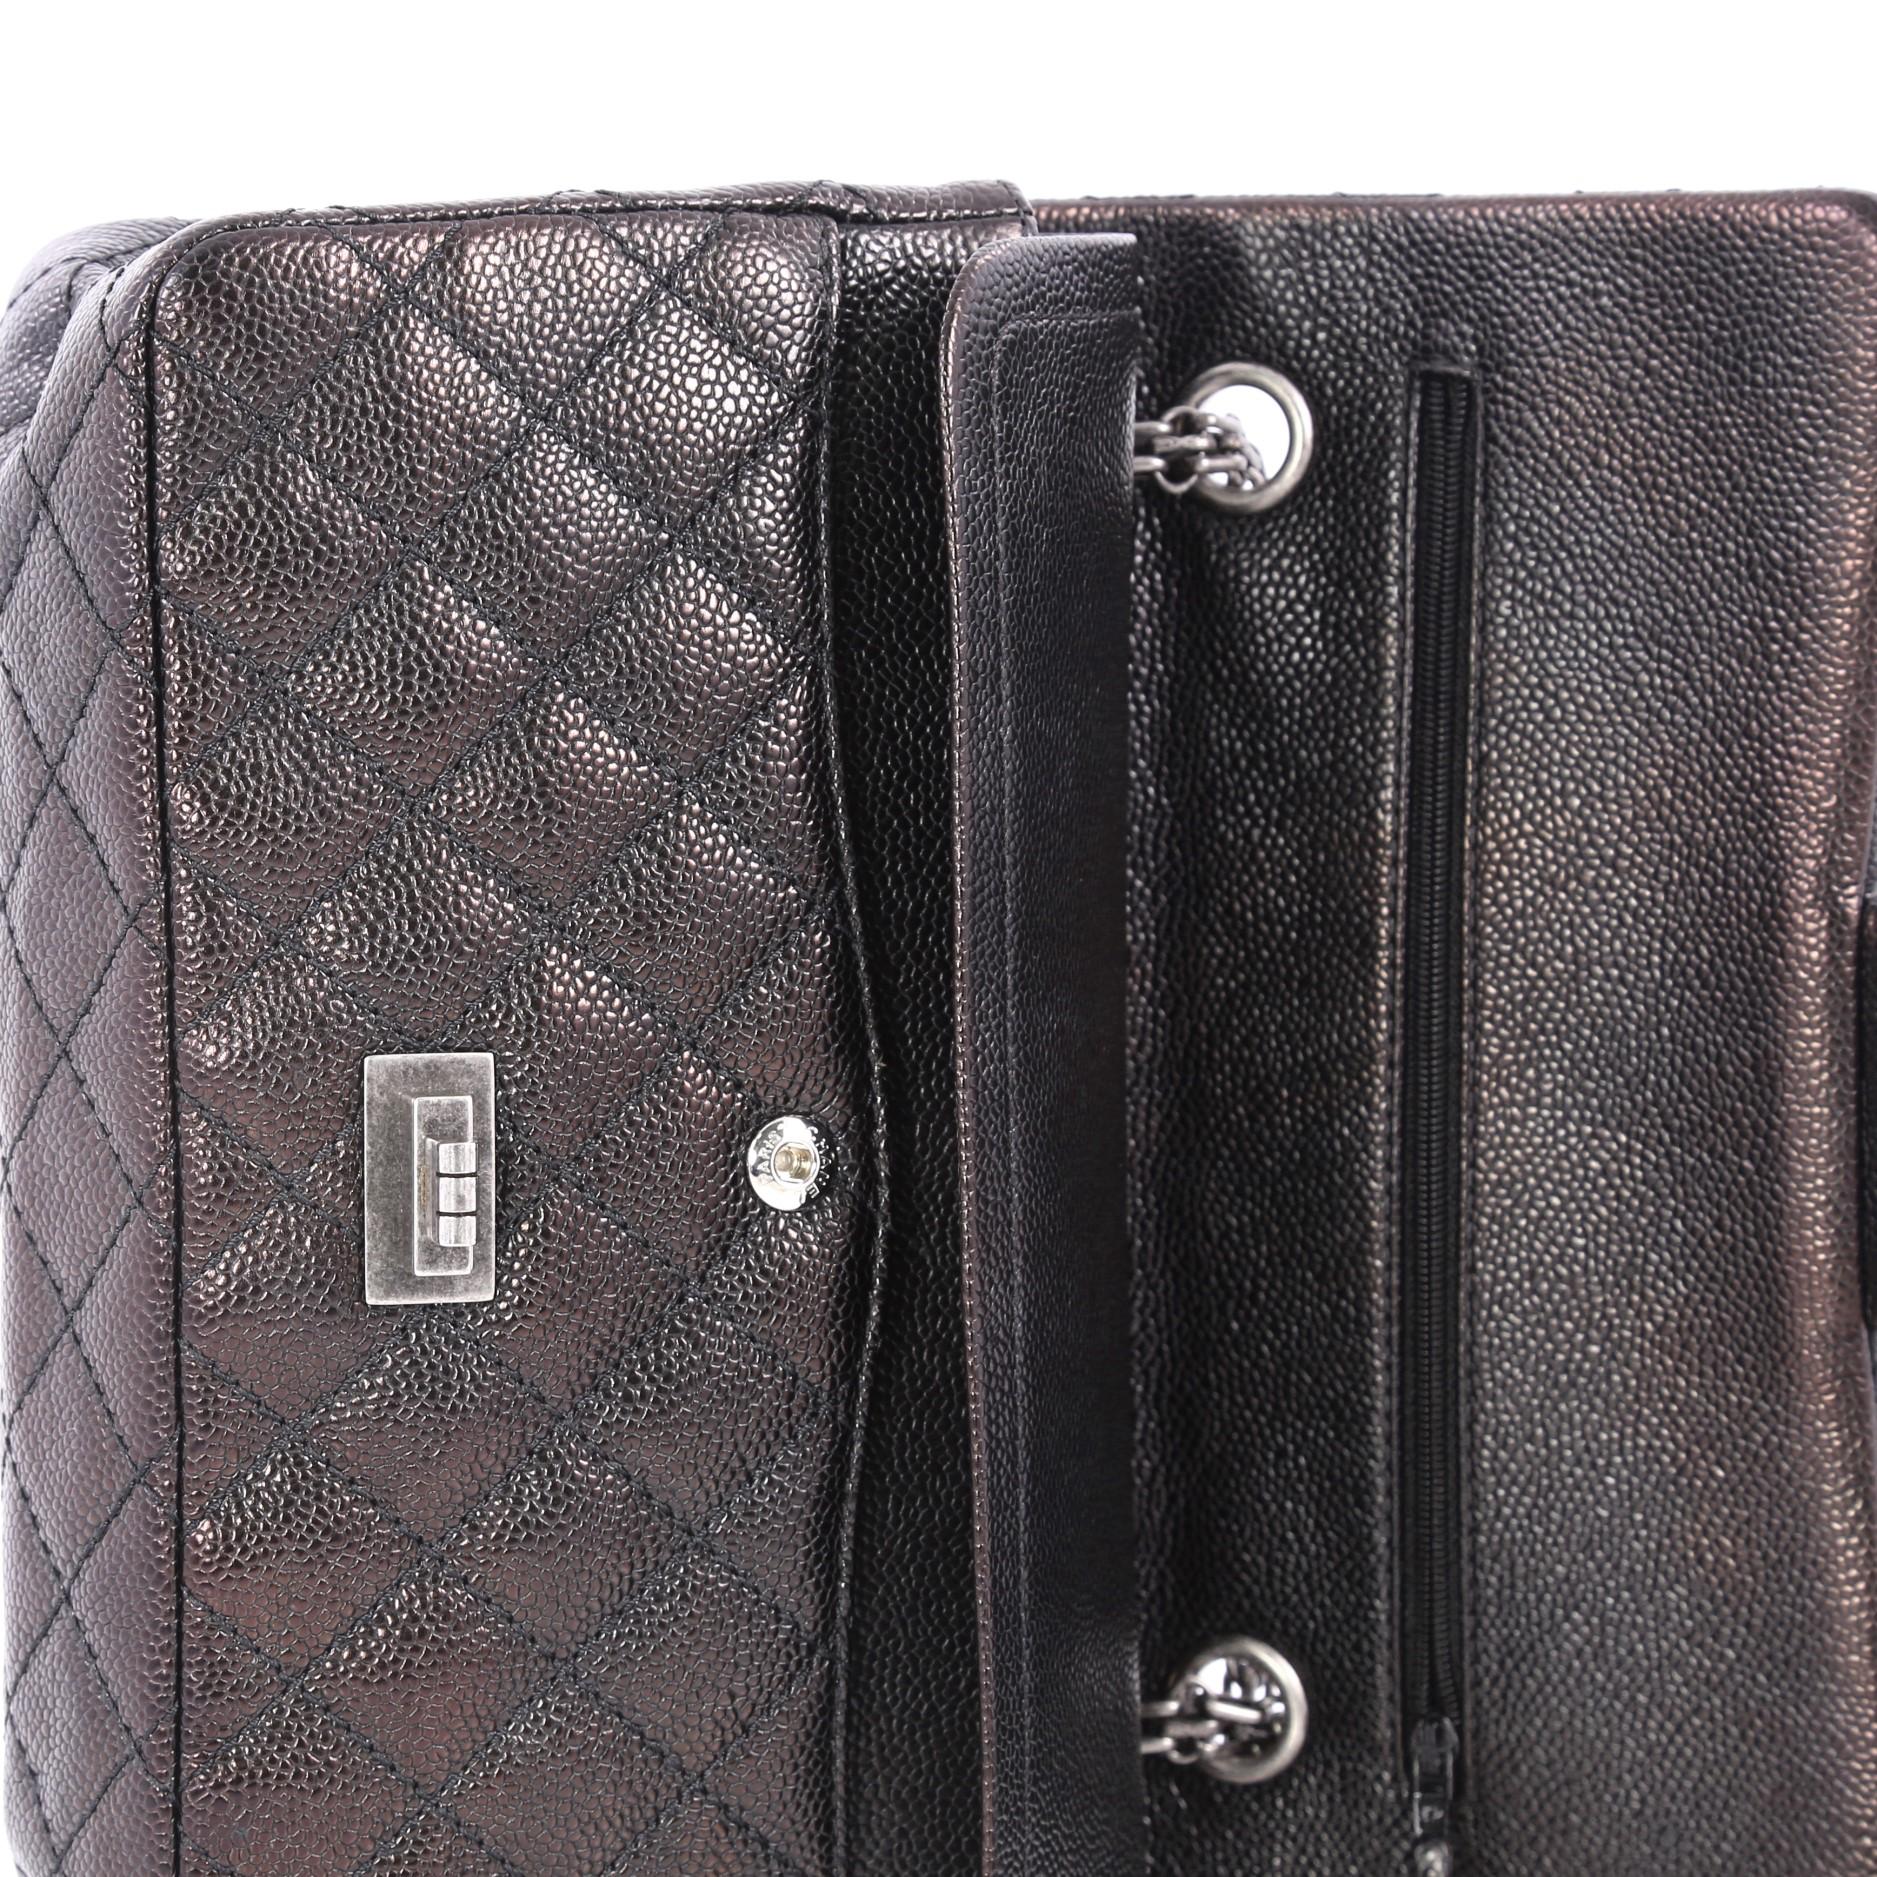 Chanel Reissue 2.55 Handbag Quilted Caviar 225 3